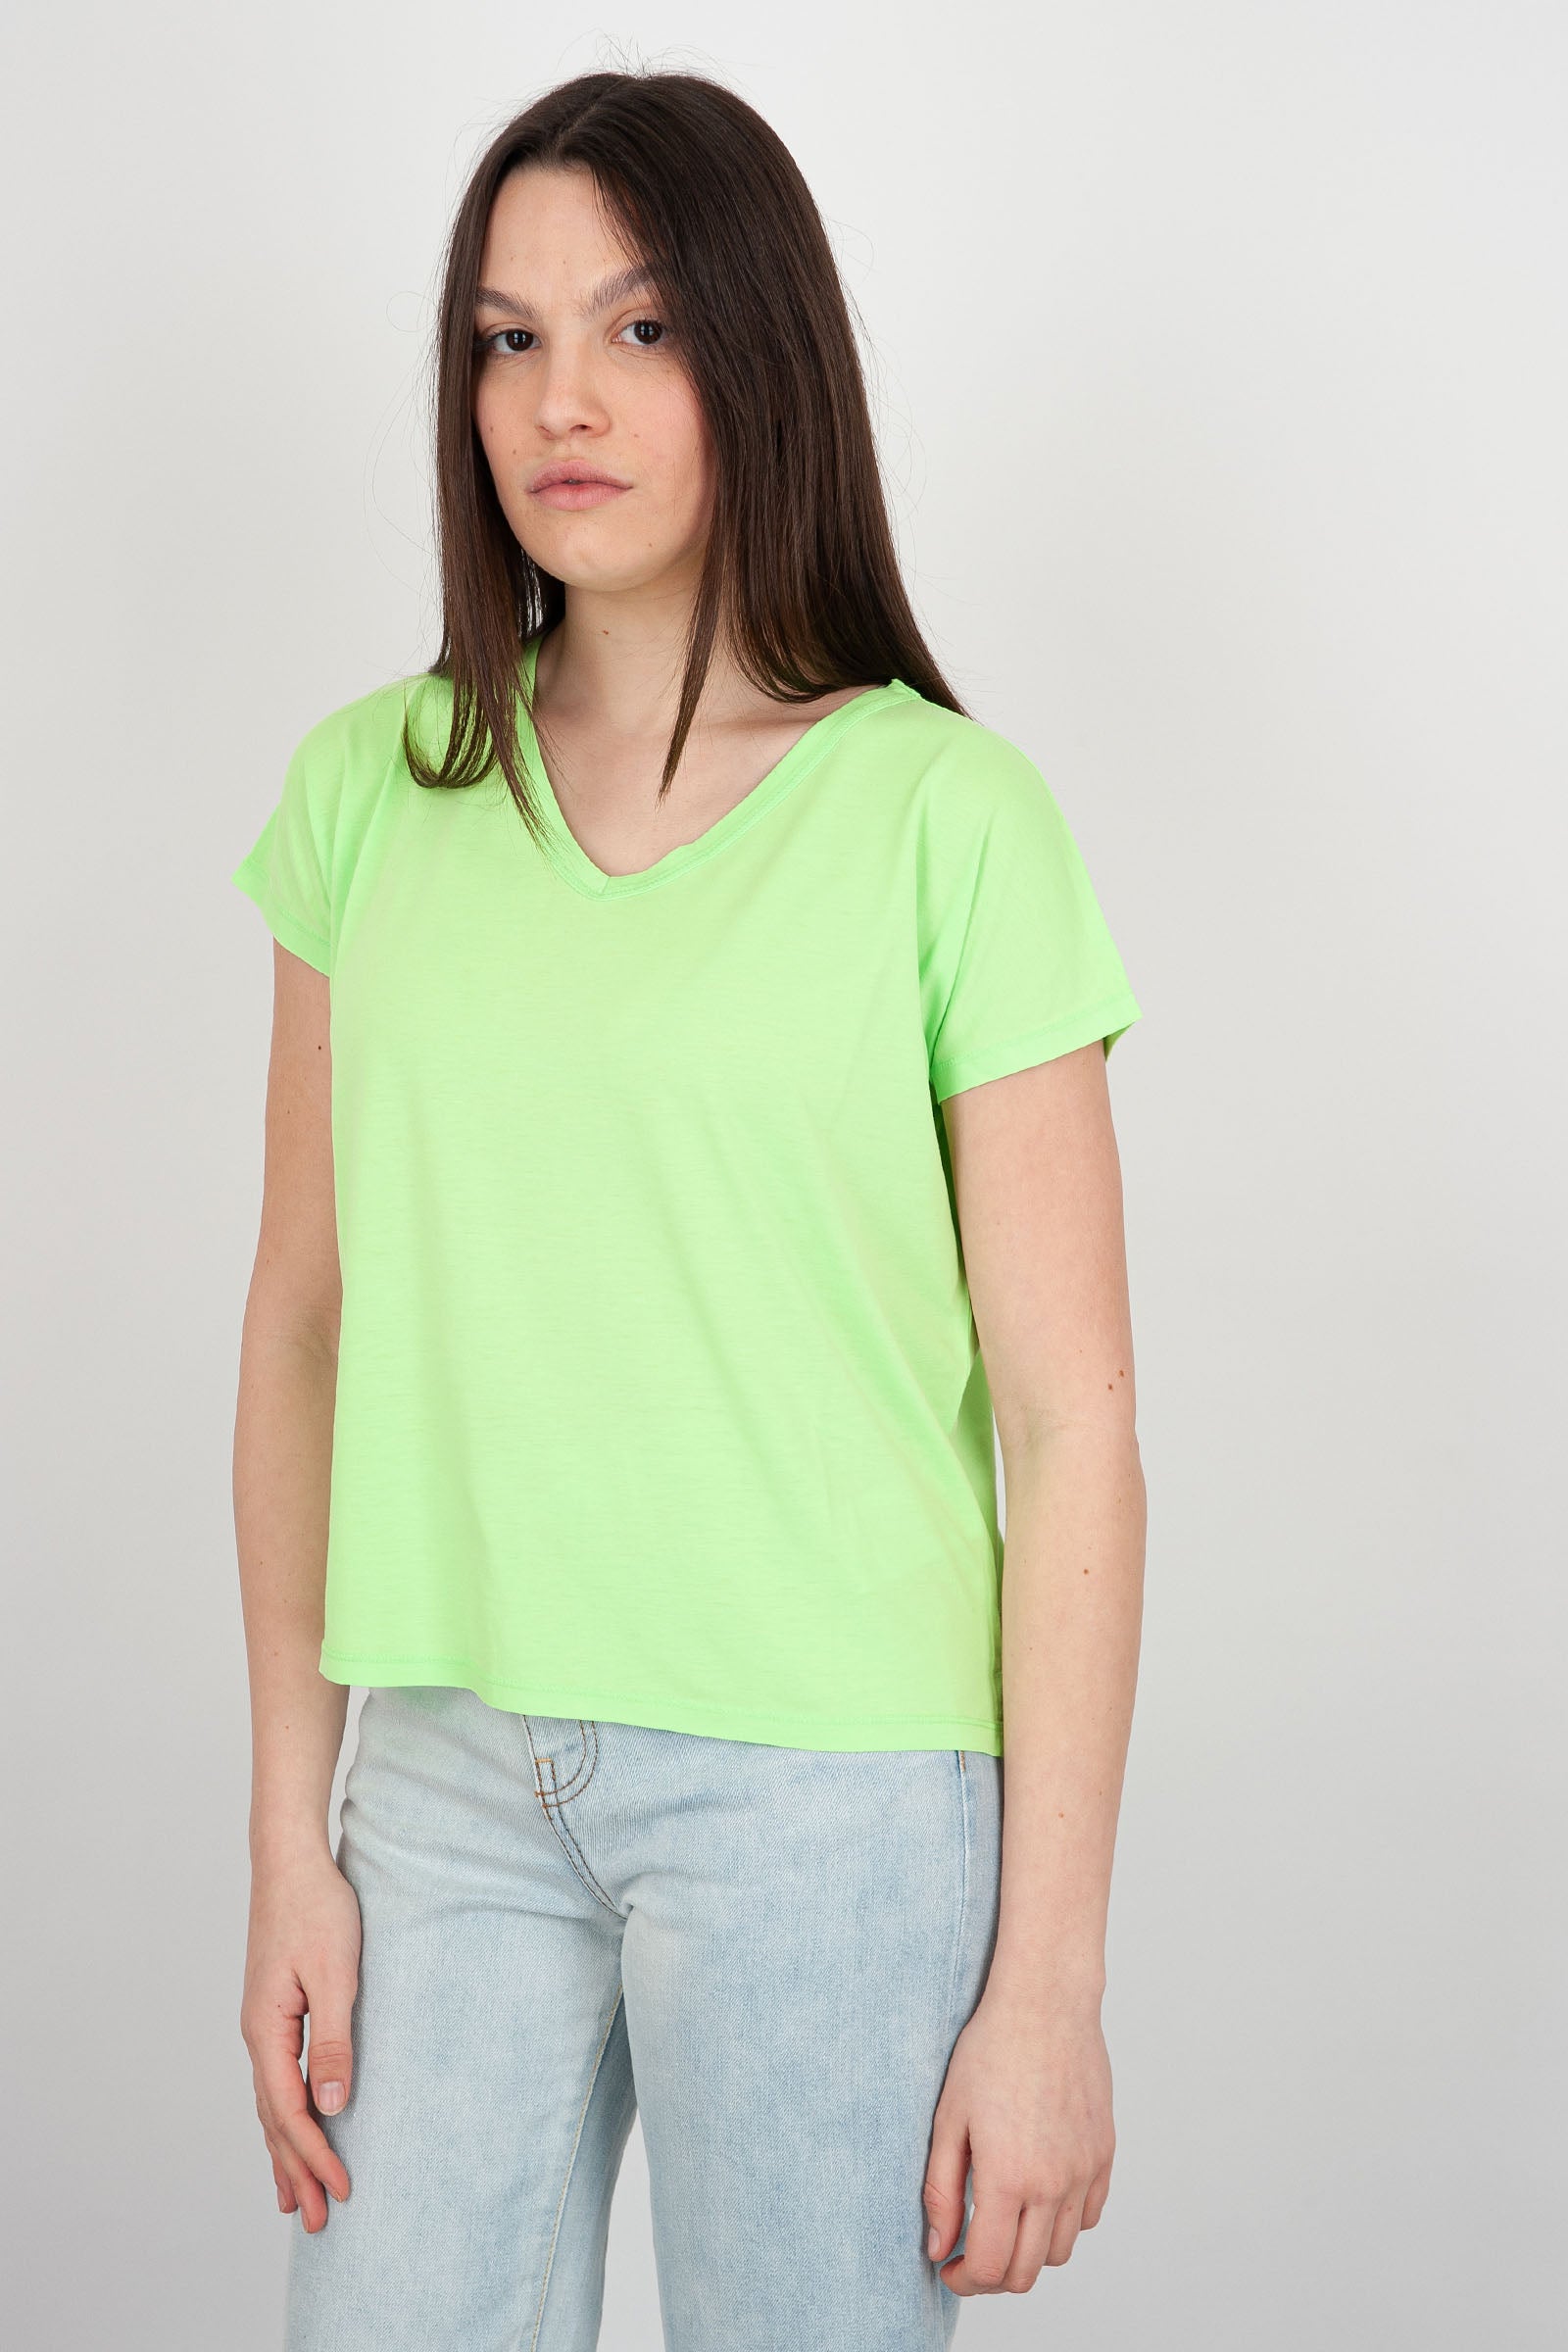 Absolut Cashmere Serra T-Shirt in Fluo Green Cotton - 1